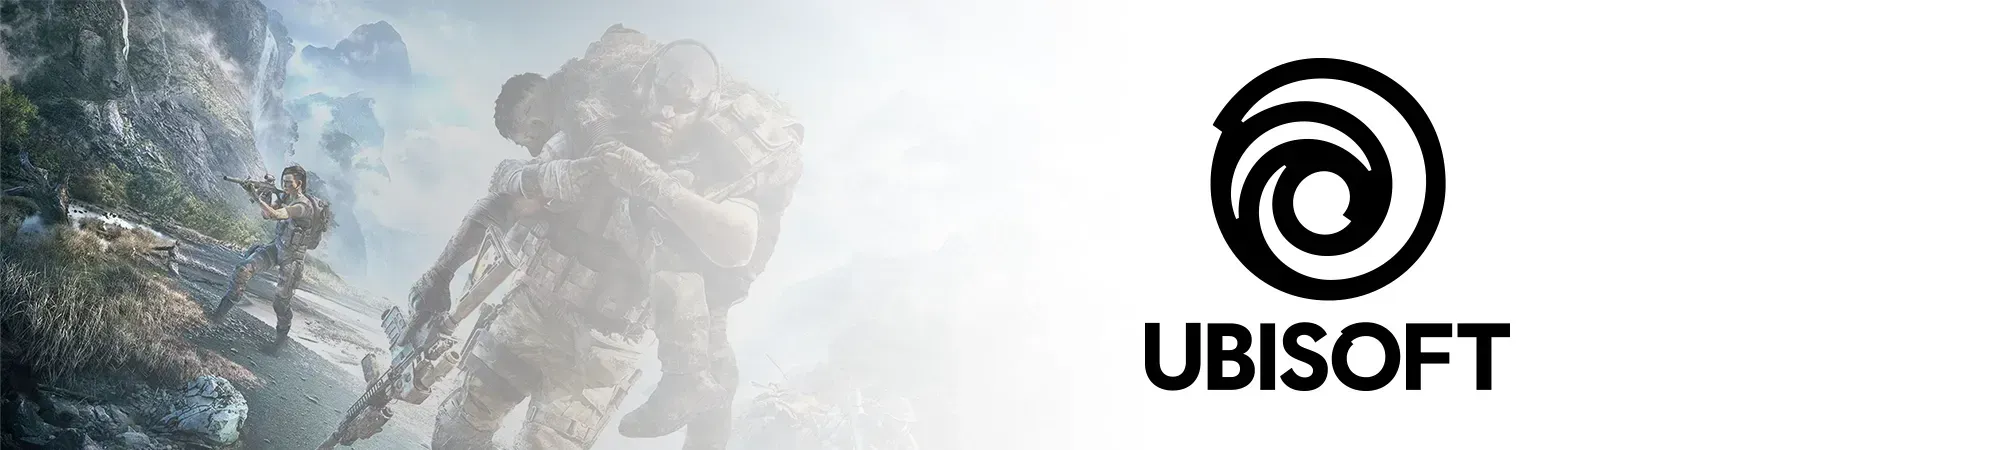 Ubisoft Paris Banner